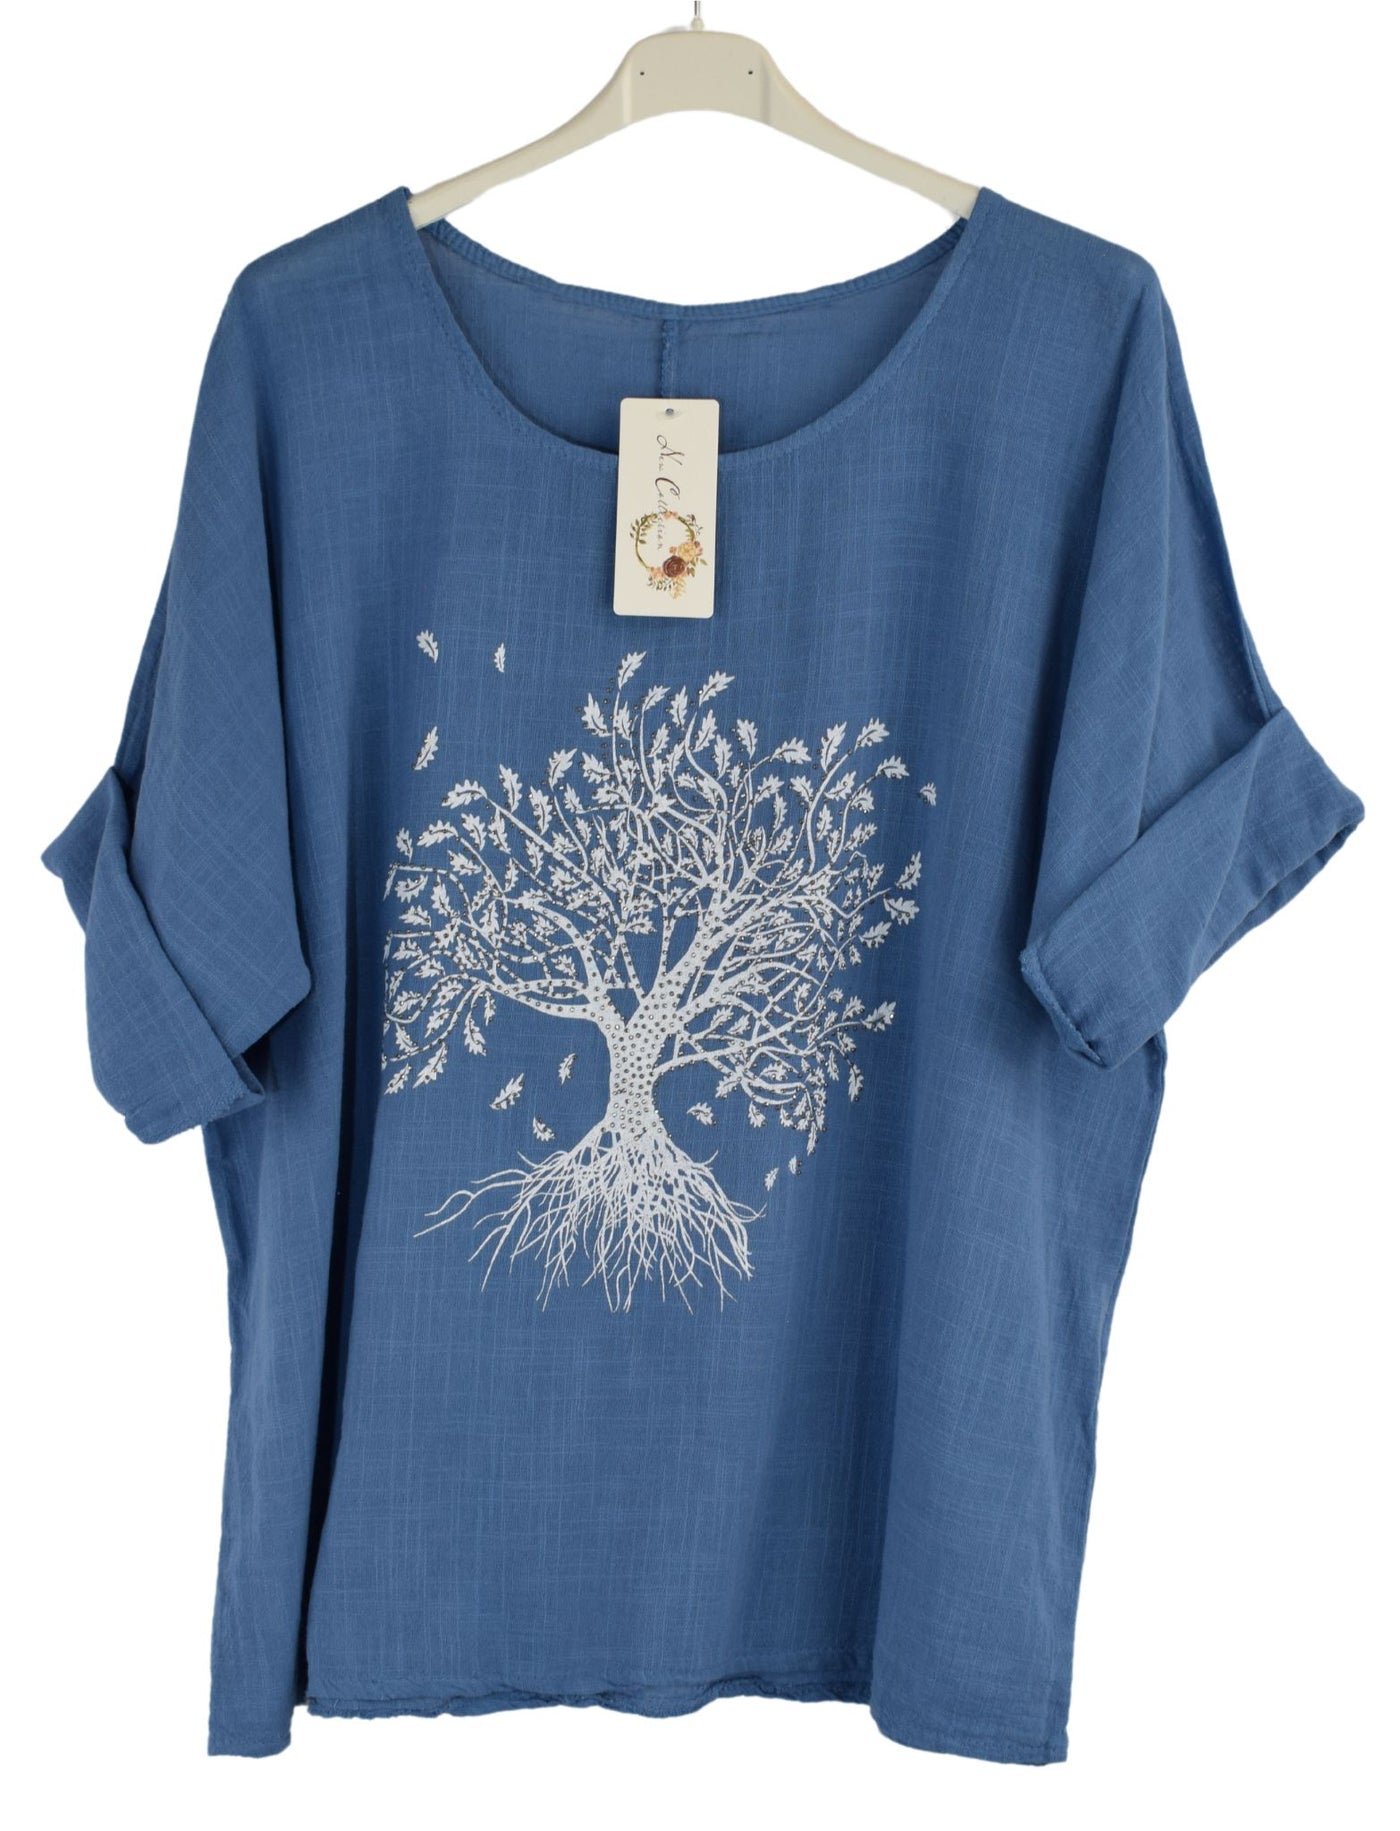 Cotton Tree Print Top Lightweight Embellished Summer Top Women's Short Sleeve Italian Top